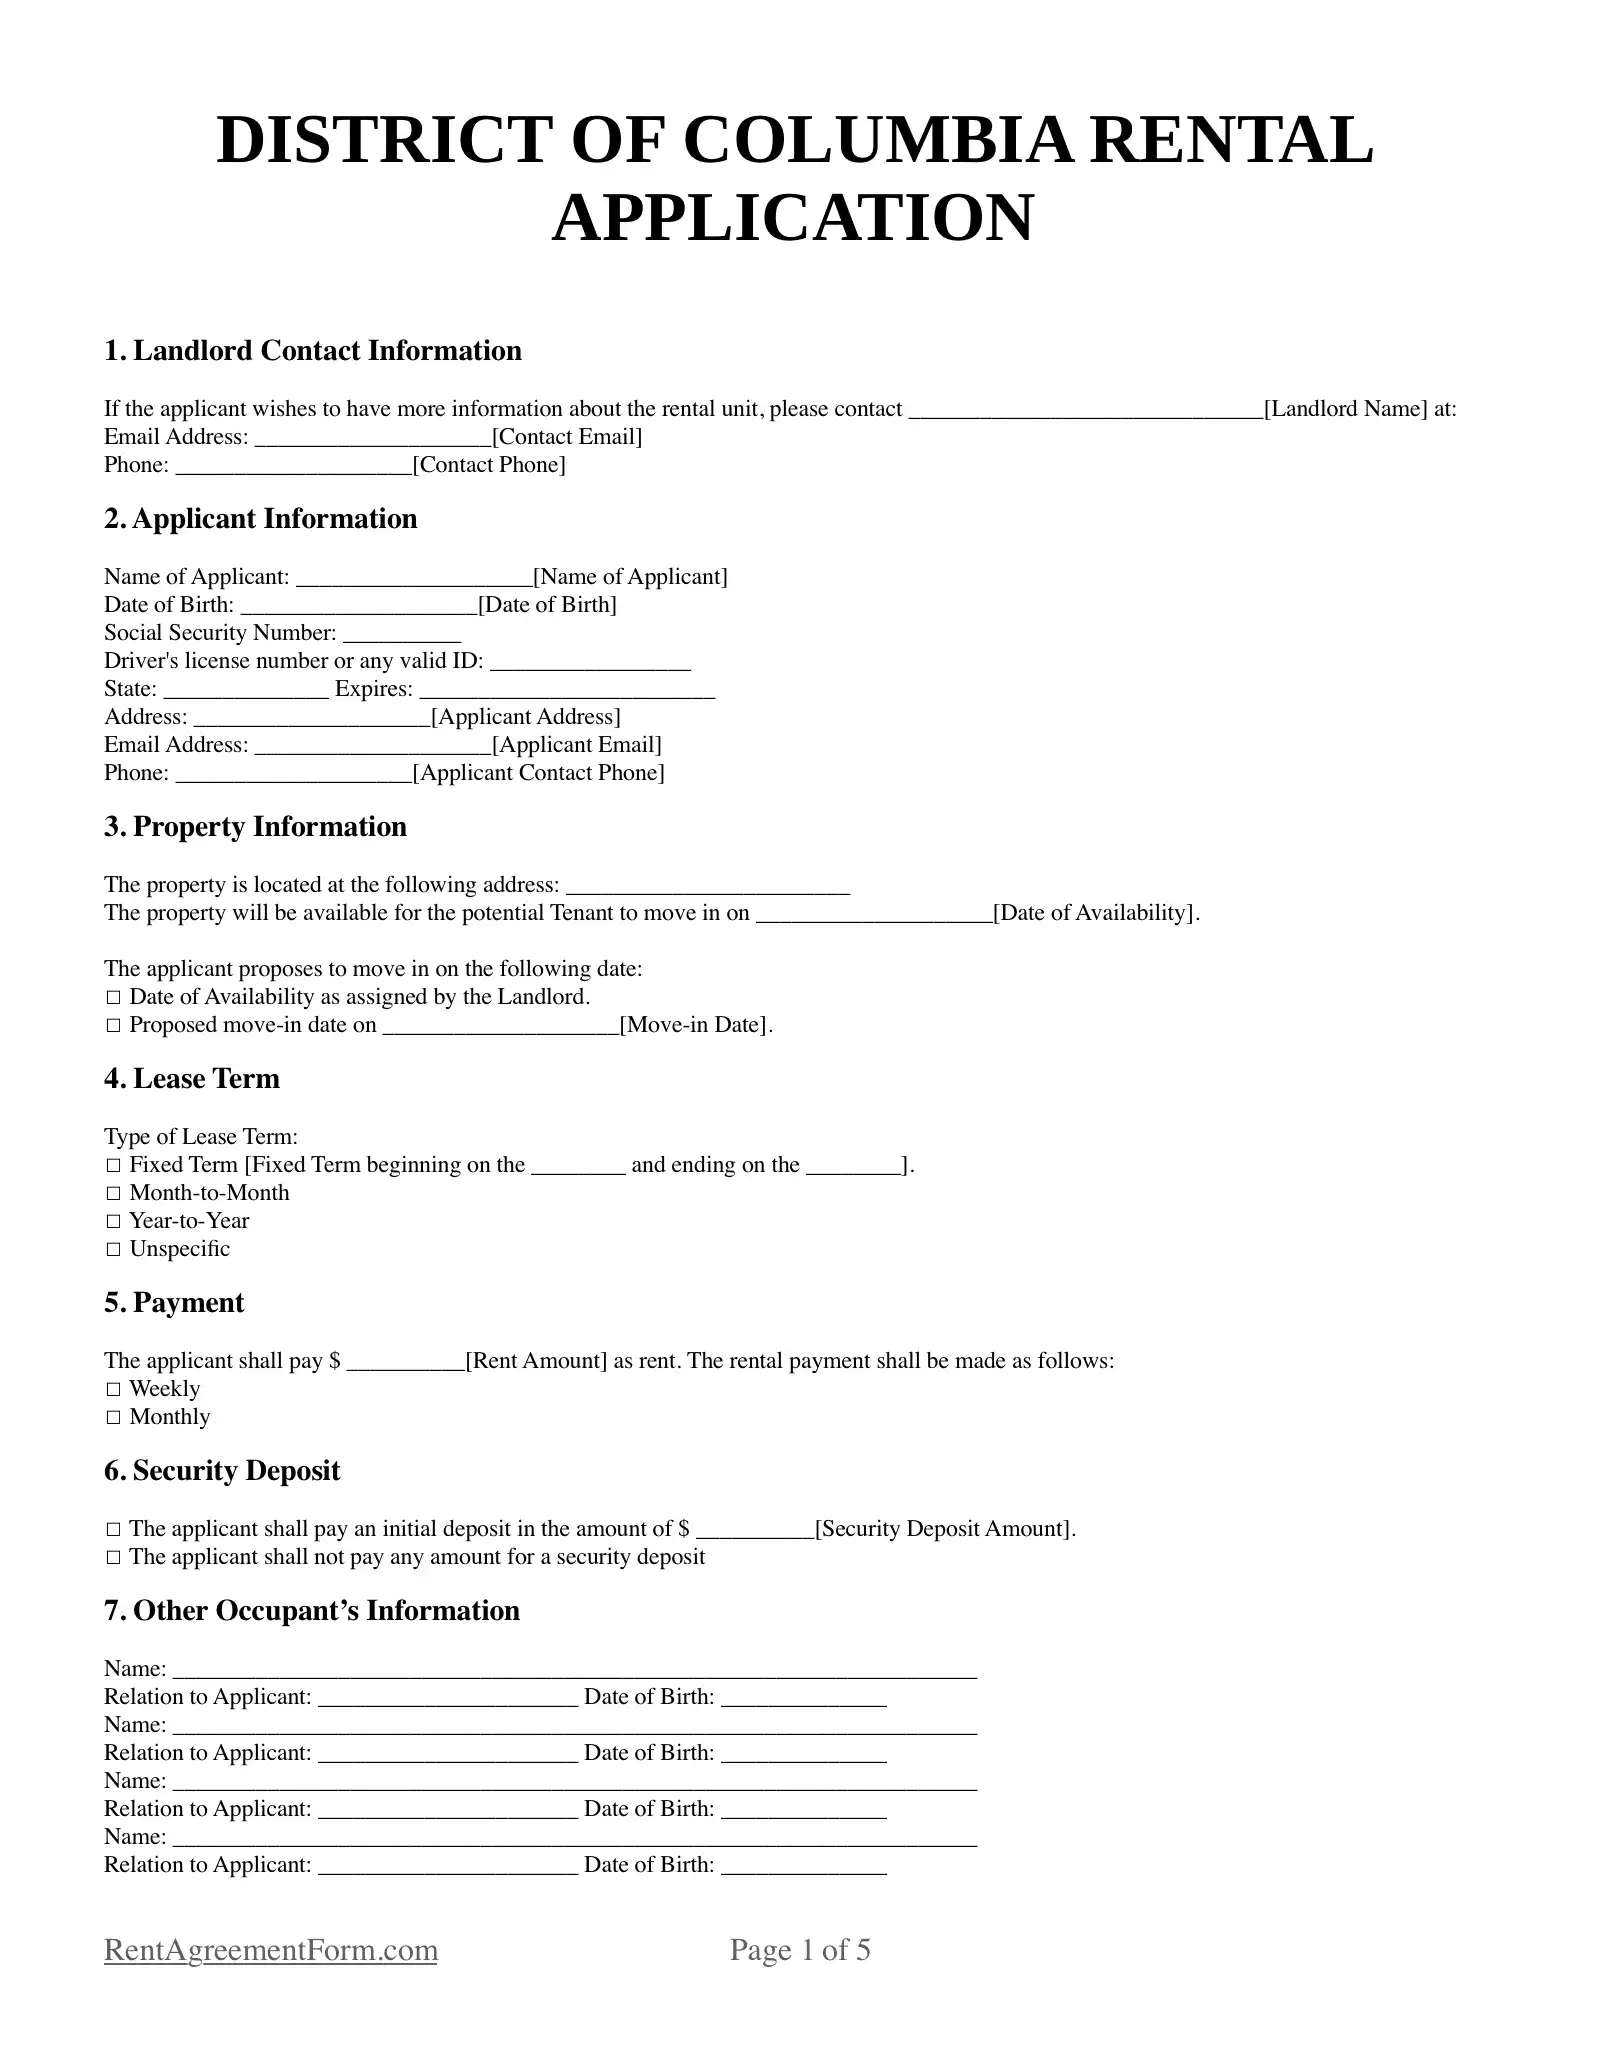 Washington D.C. Rental Application Sample